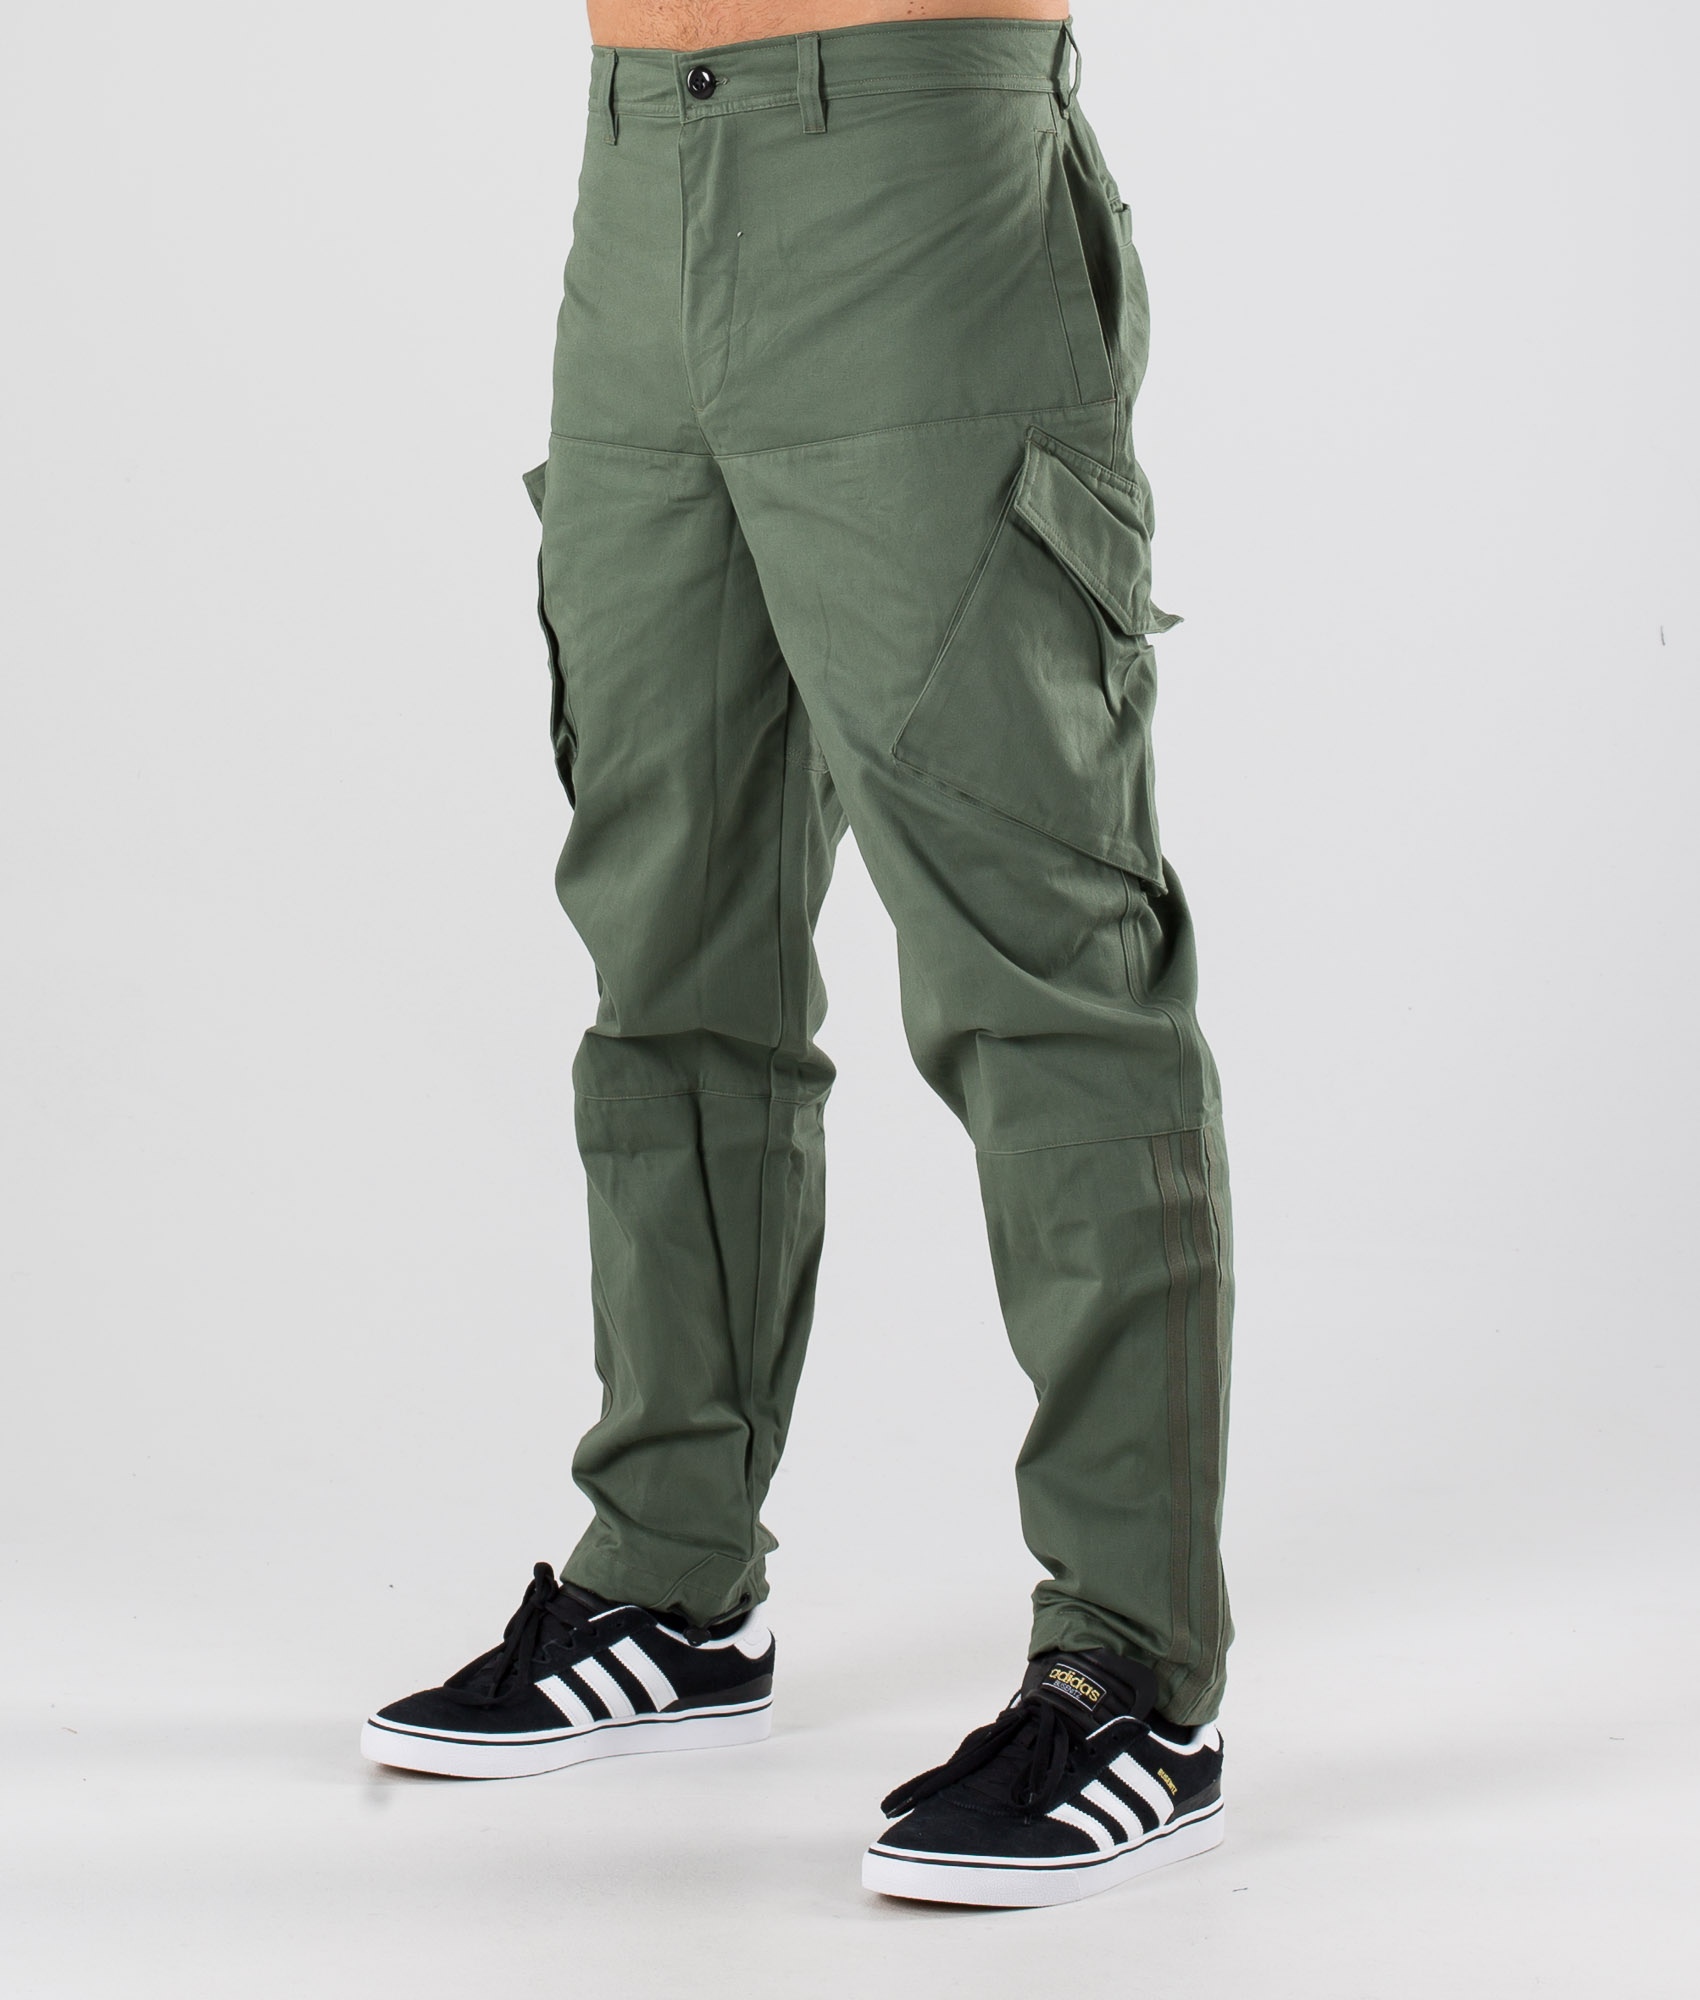 Adidas Skateboarding Cargopants Pants 